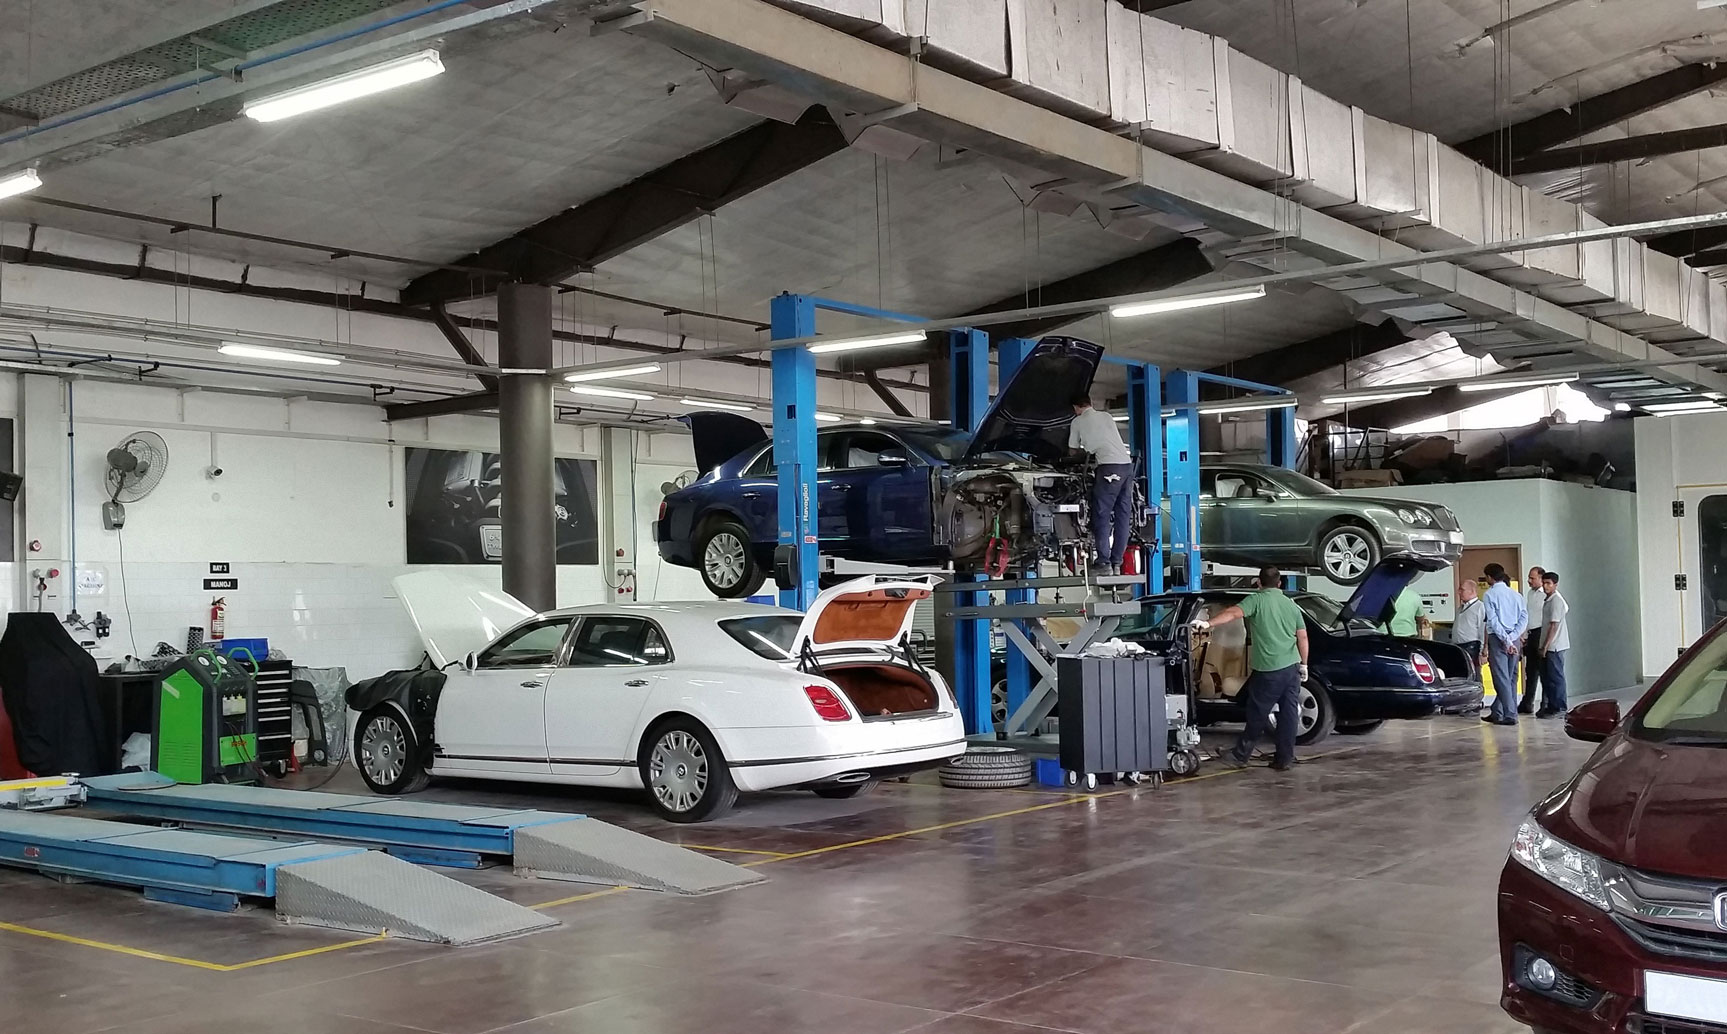 Mechanics repair four Bentley cars in an Indian workshop